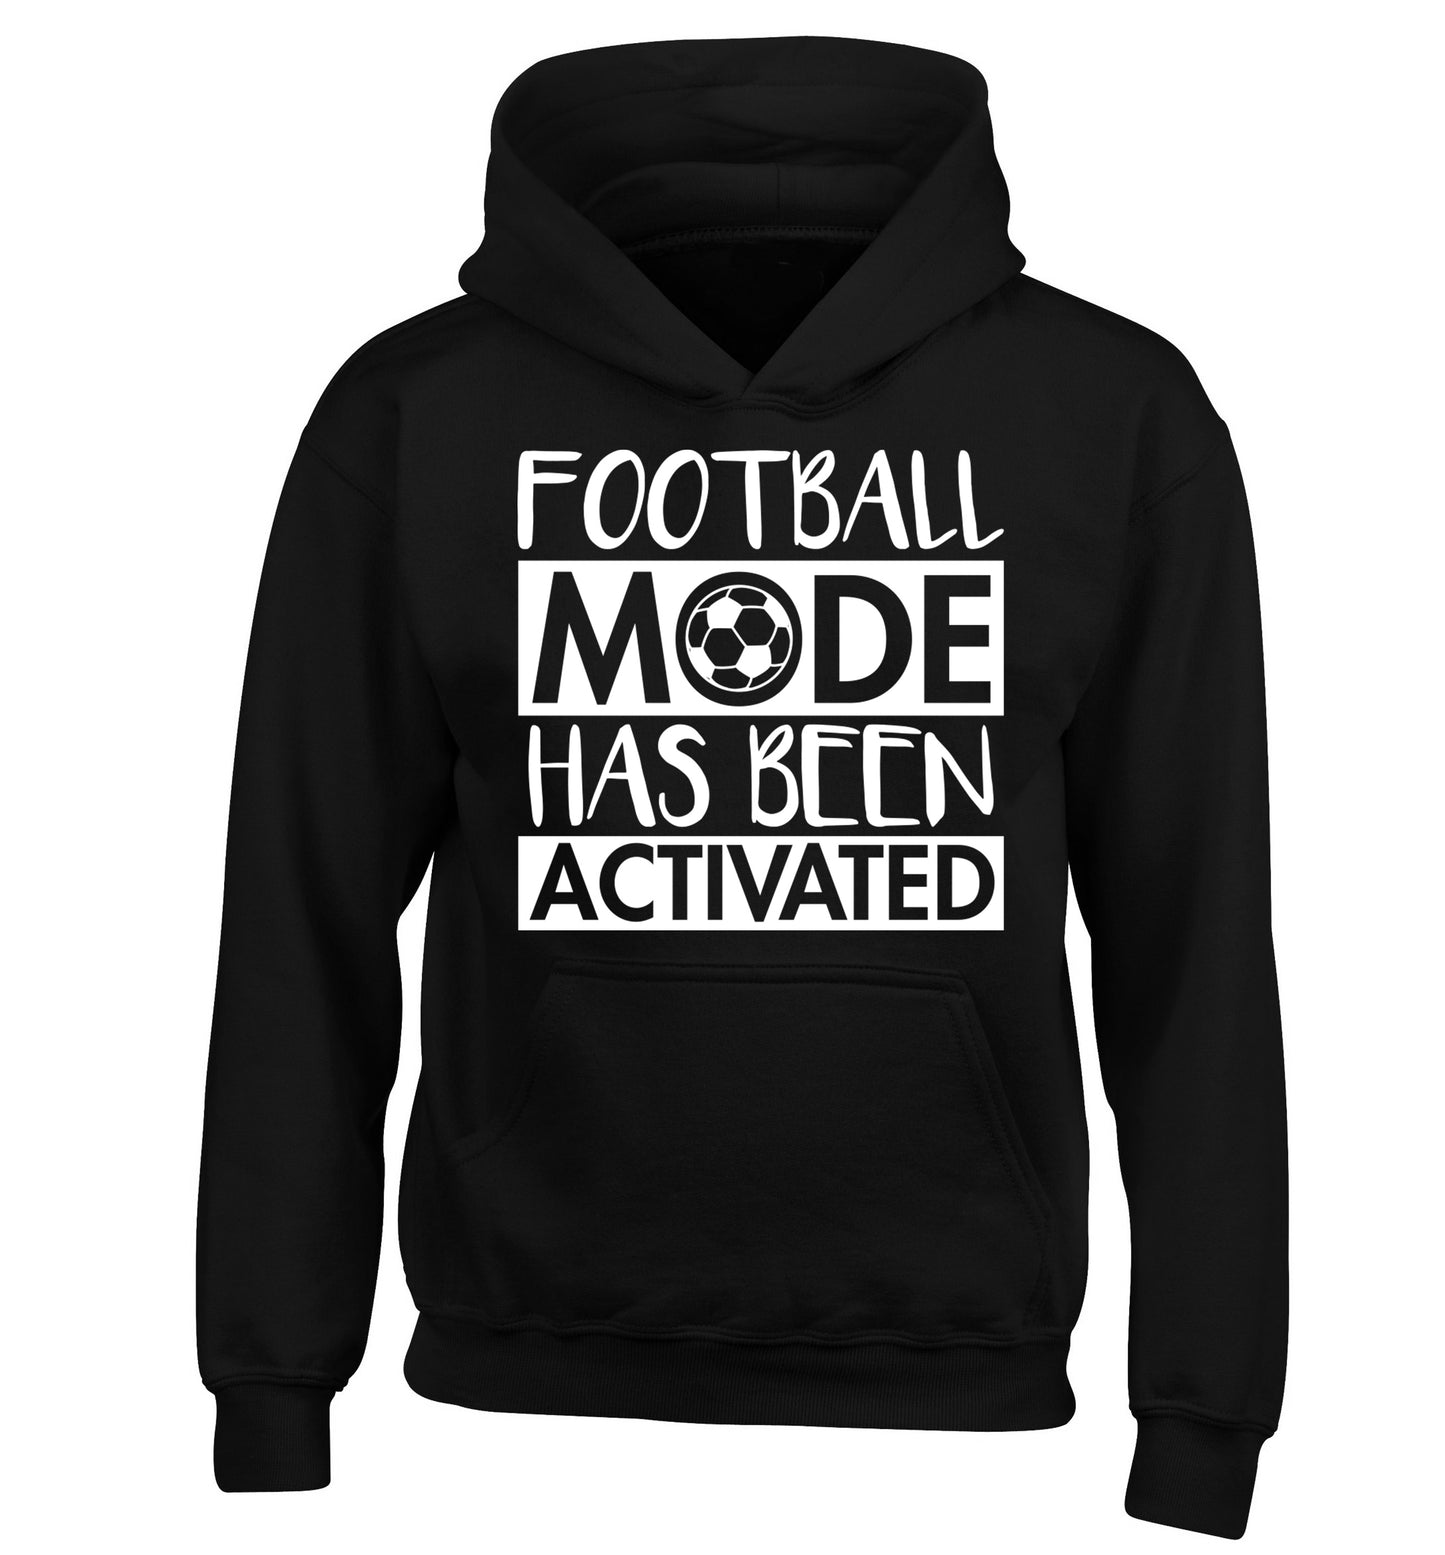 Football mode has been activated children's black hoodie 12-14 Years